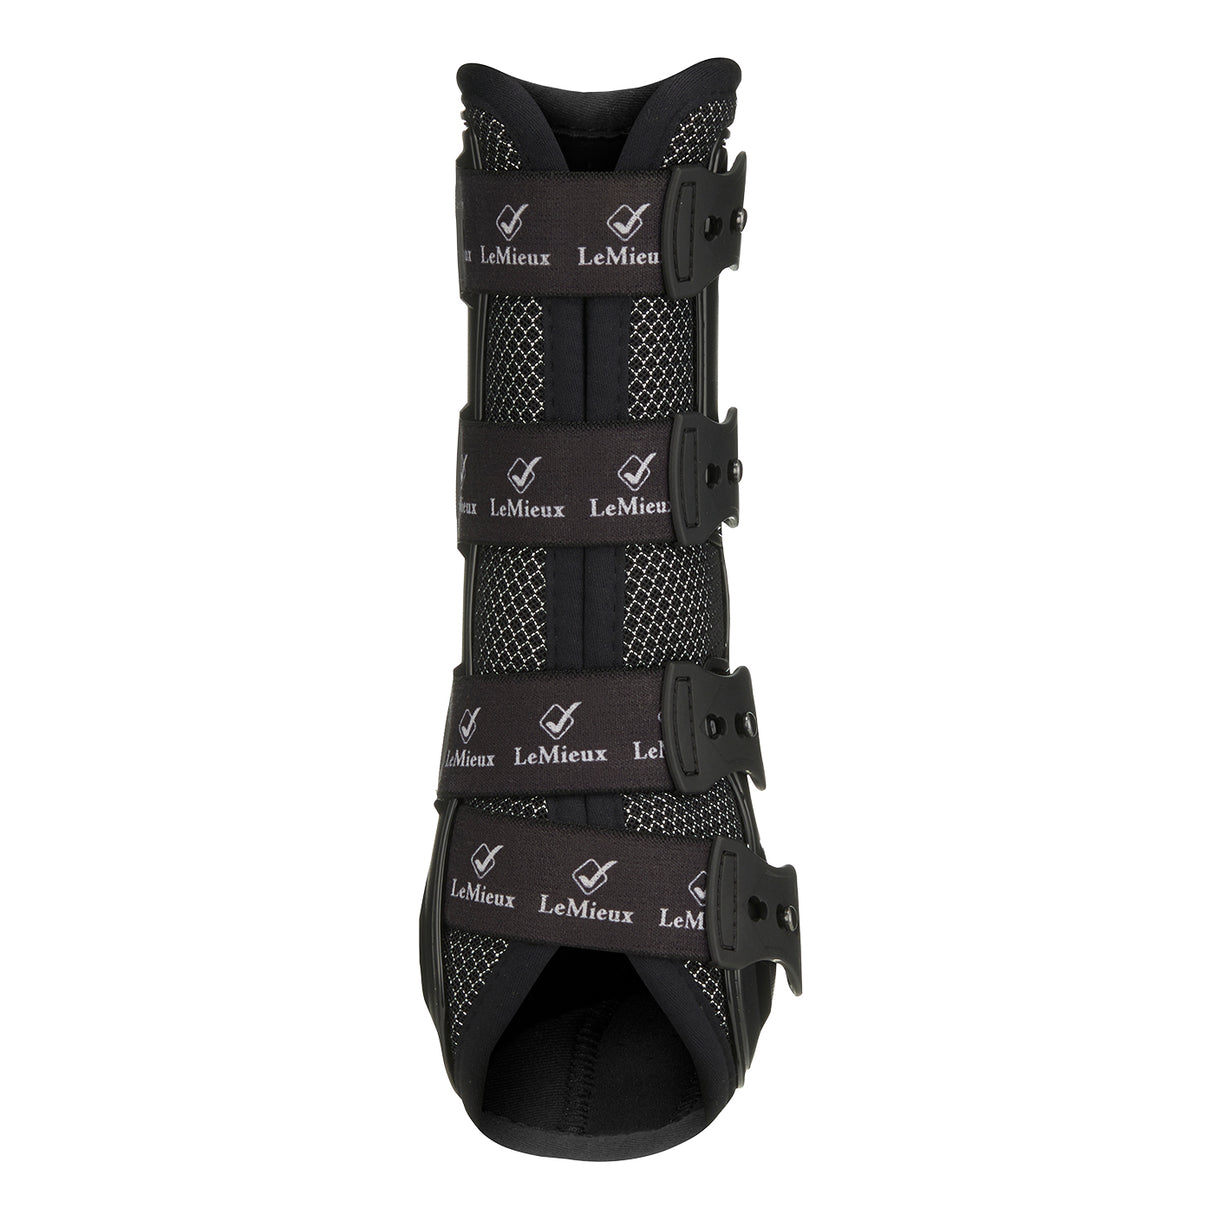 LeMieux Ultra Mesh Hind Snug Boots